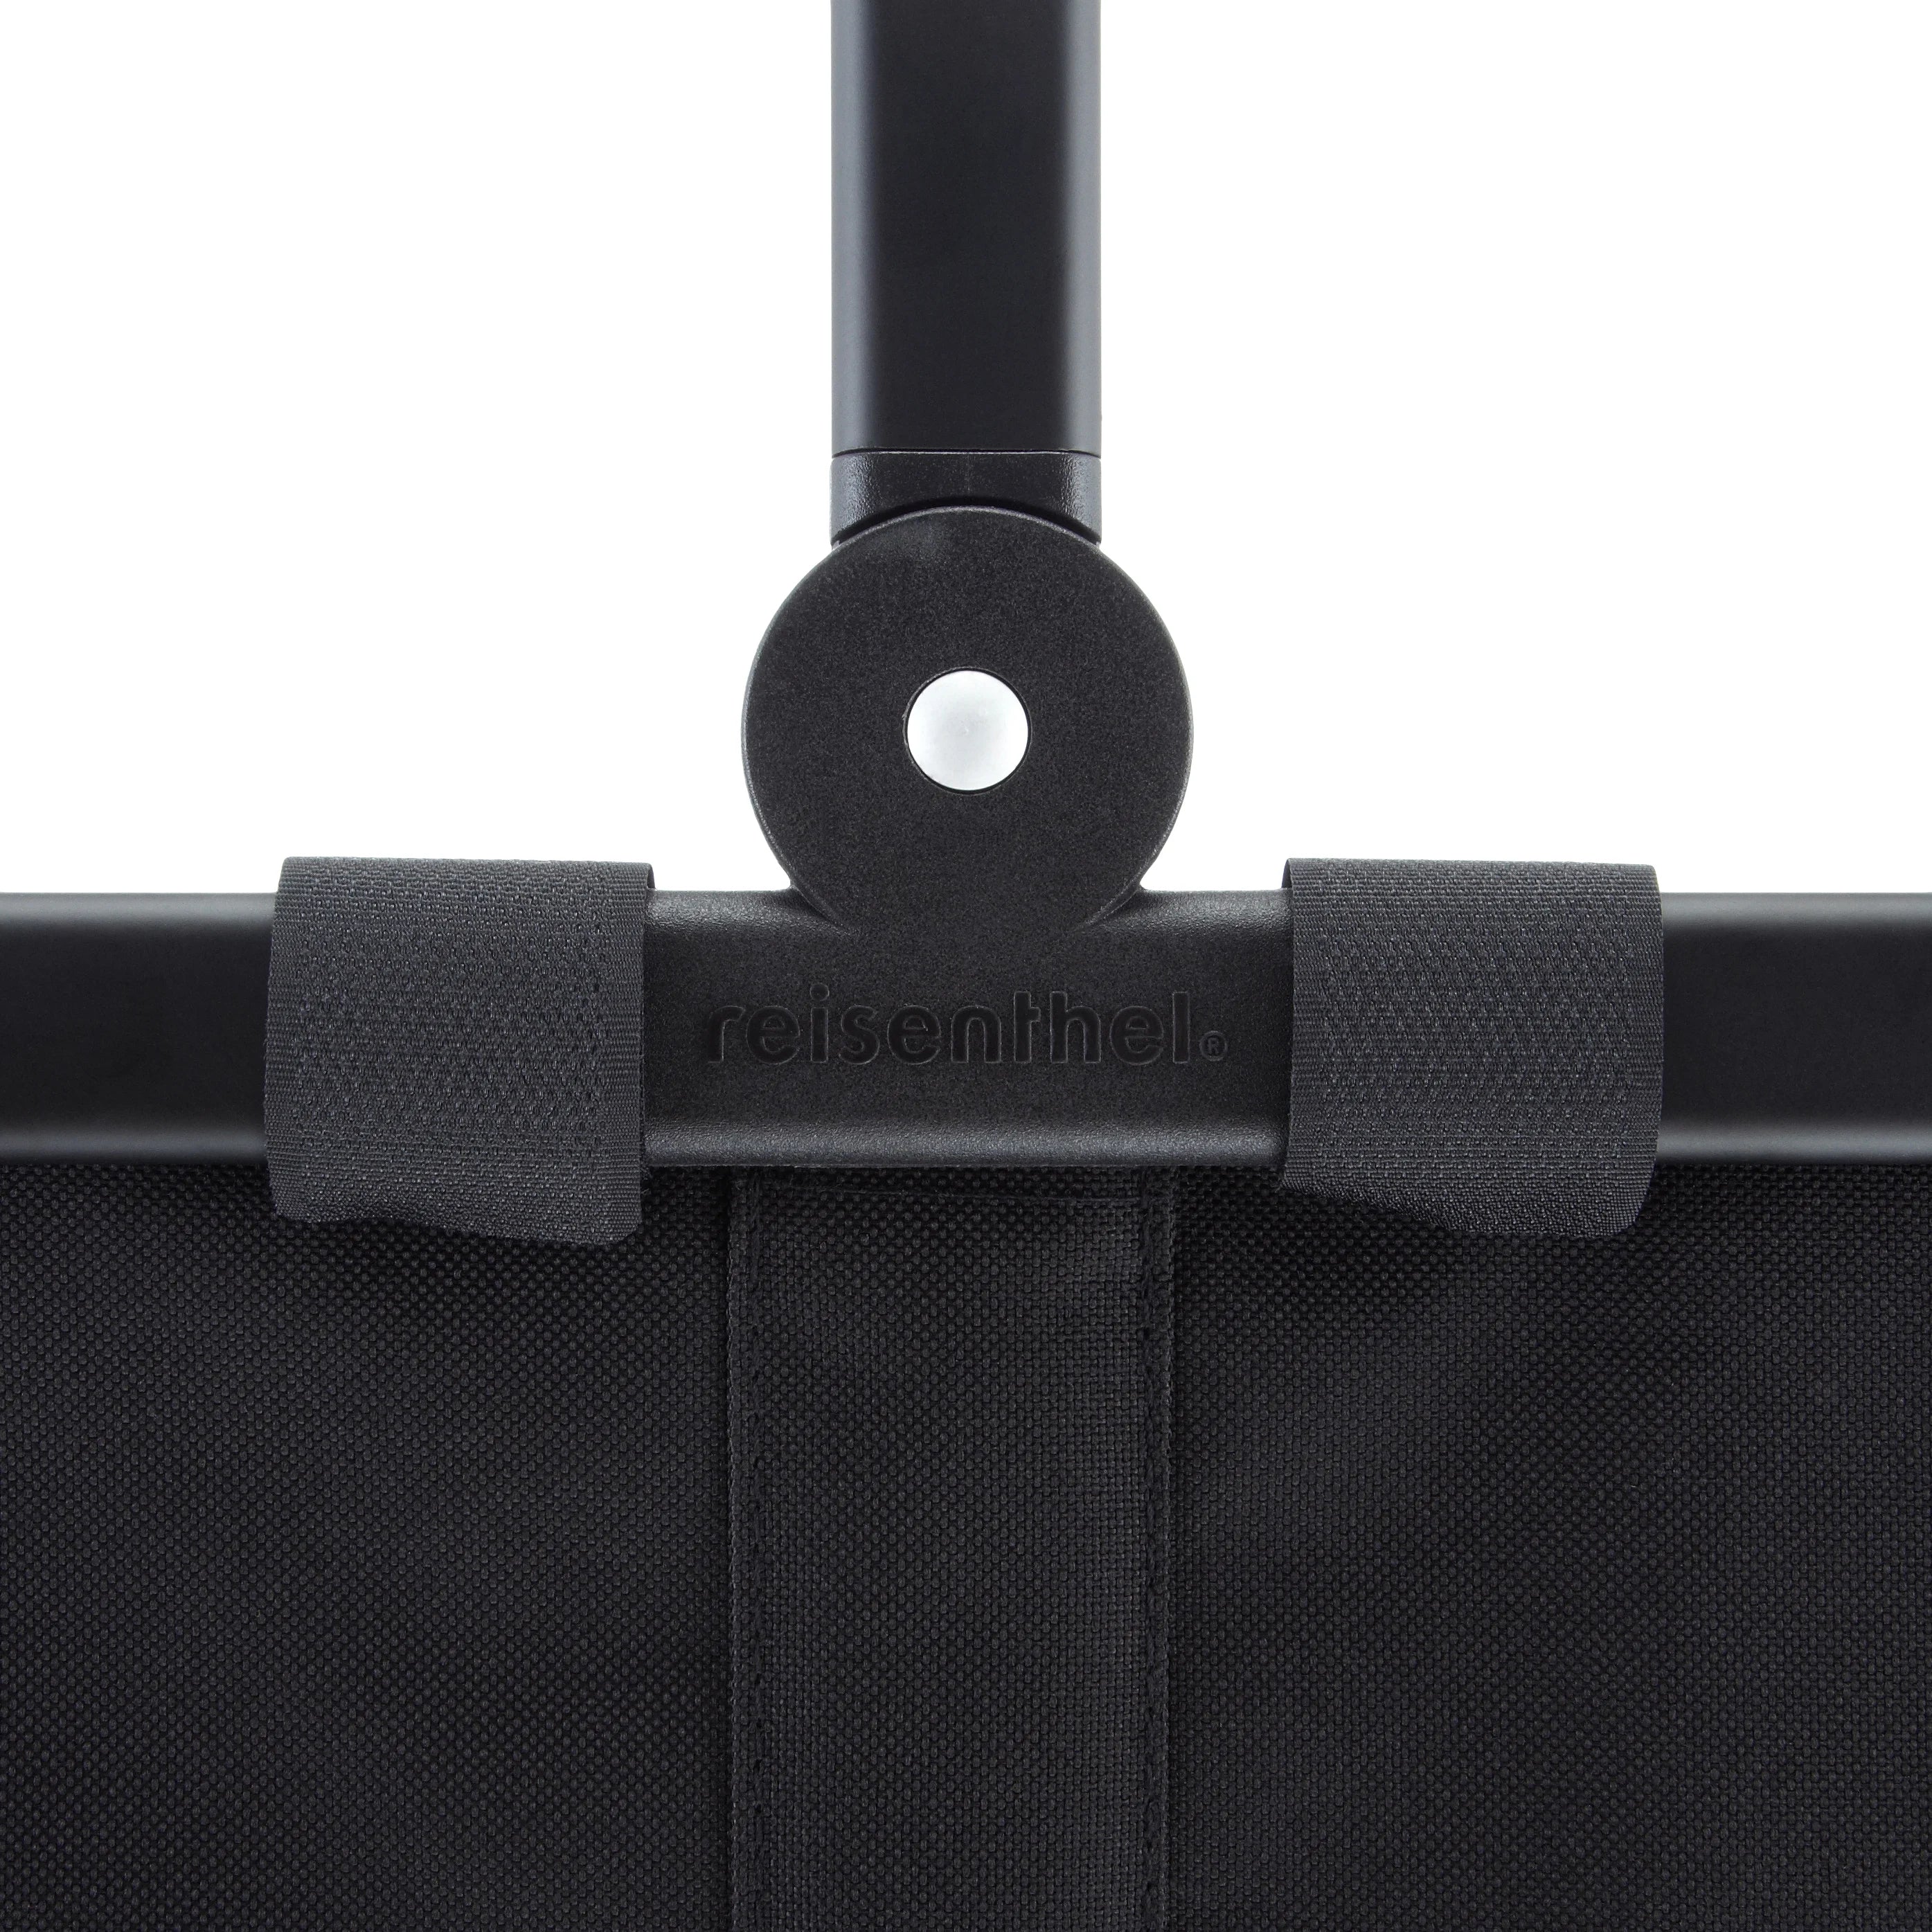 Reisenthel Shopping Carrybag Frame panier à provisions 48 cm - or/noir